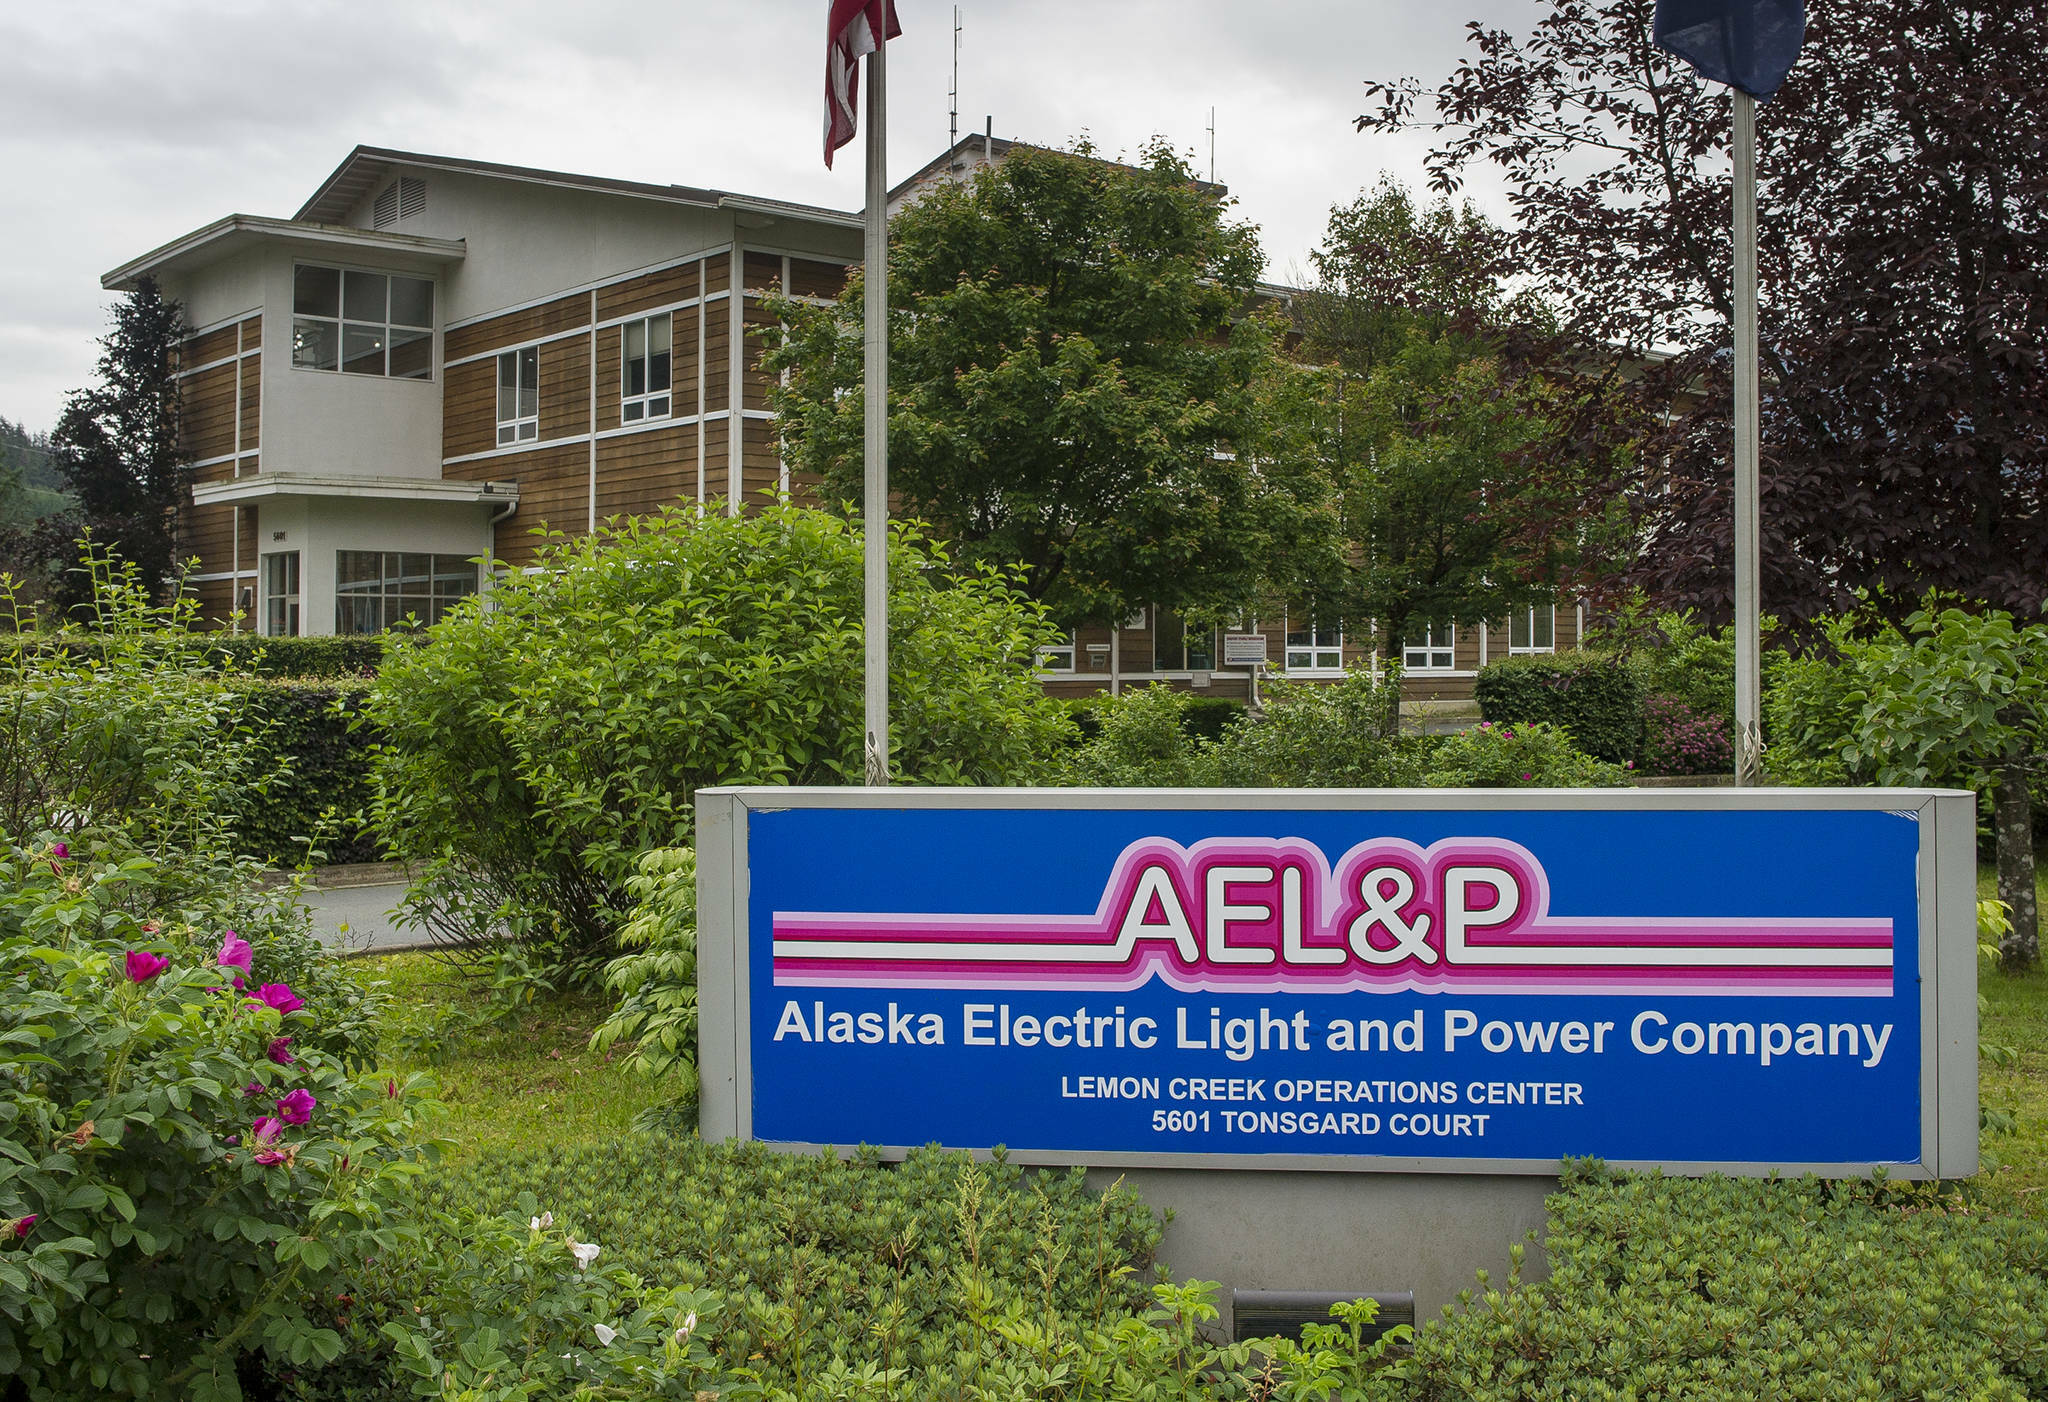 Alaska Electric Light and Power Co.’s Lemon Creek operations center in Juneau. (Michael Penn / Juneau Empire File)